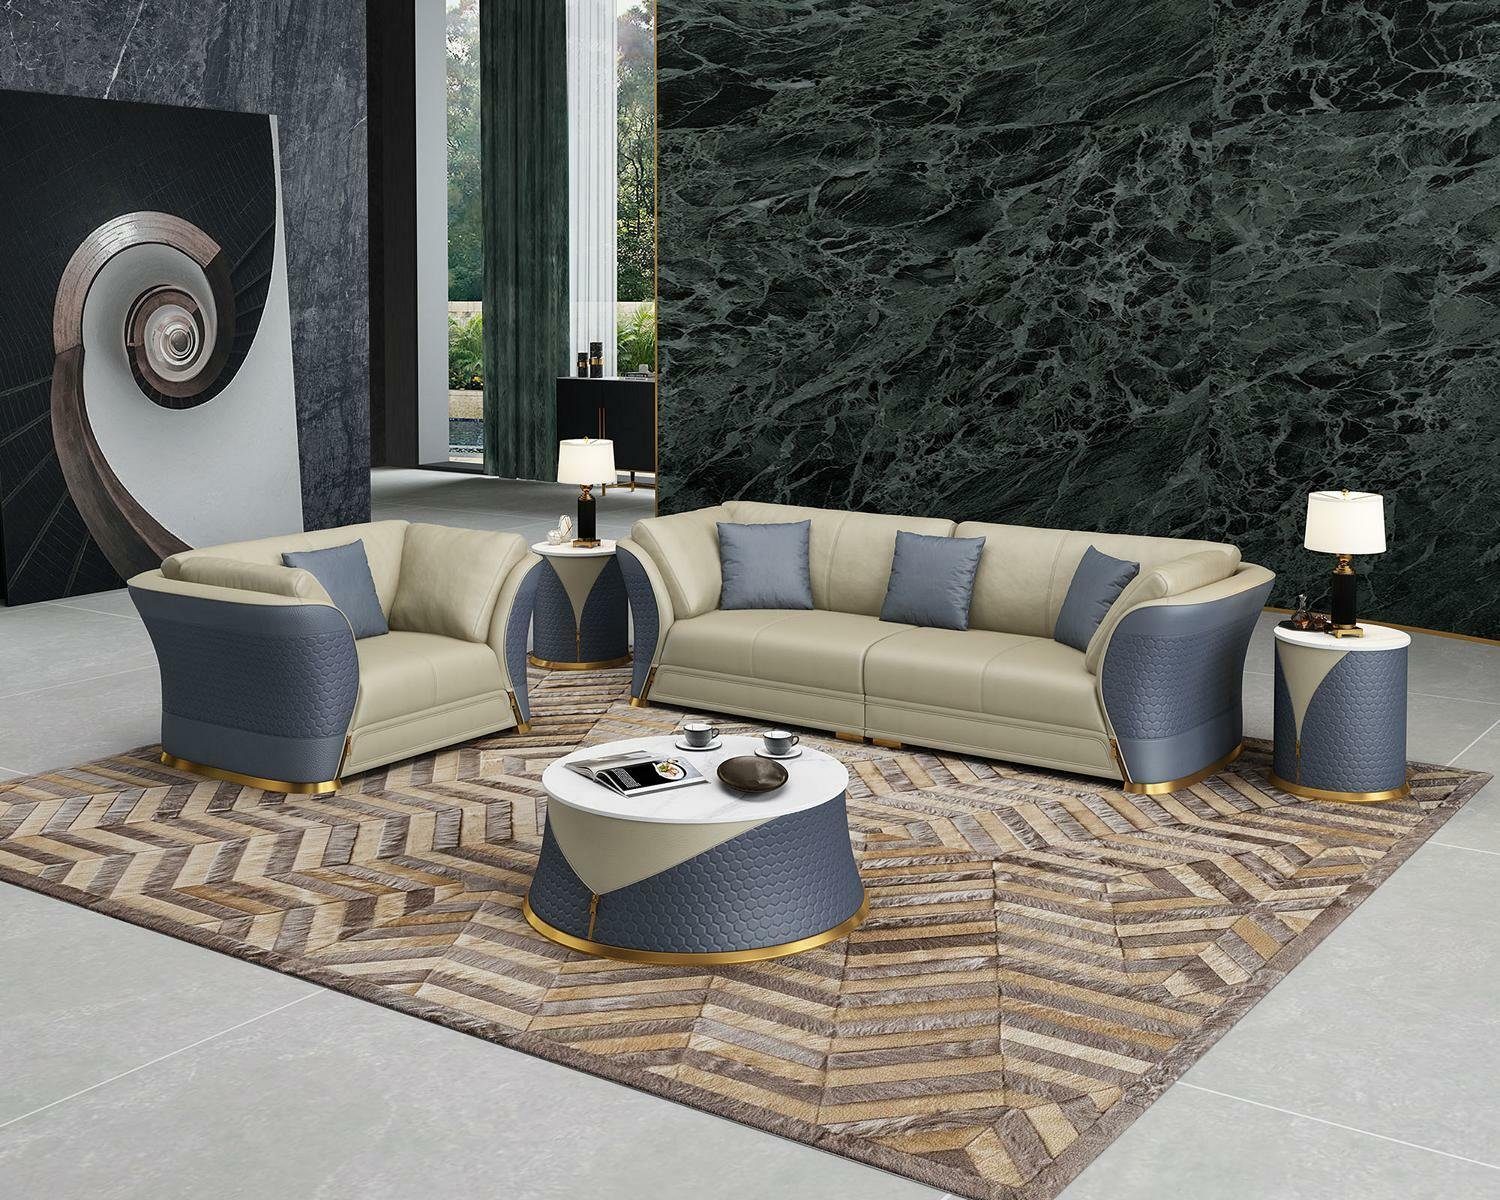 JVmoebel Sofa Luxus Sitzgarnitur 3+2+1 Sitzer Polstermöbel Leder Neu, Made in Europe Braun/Blau